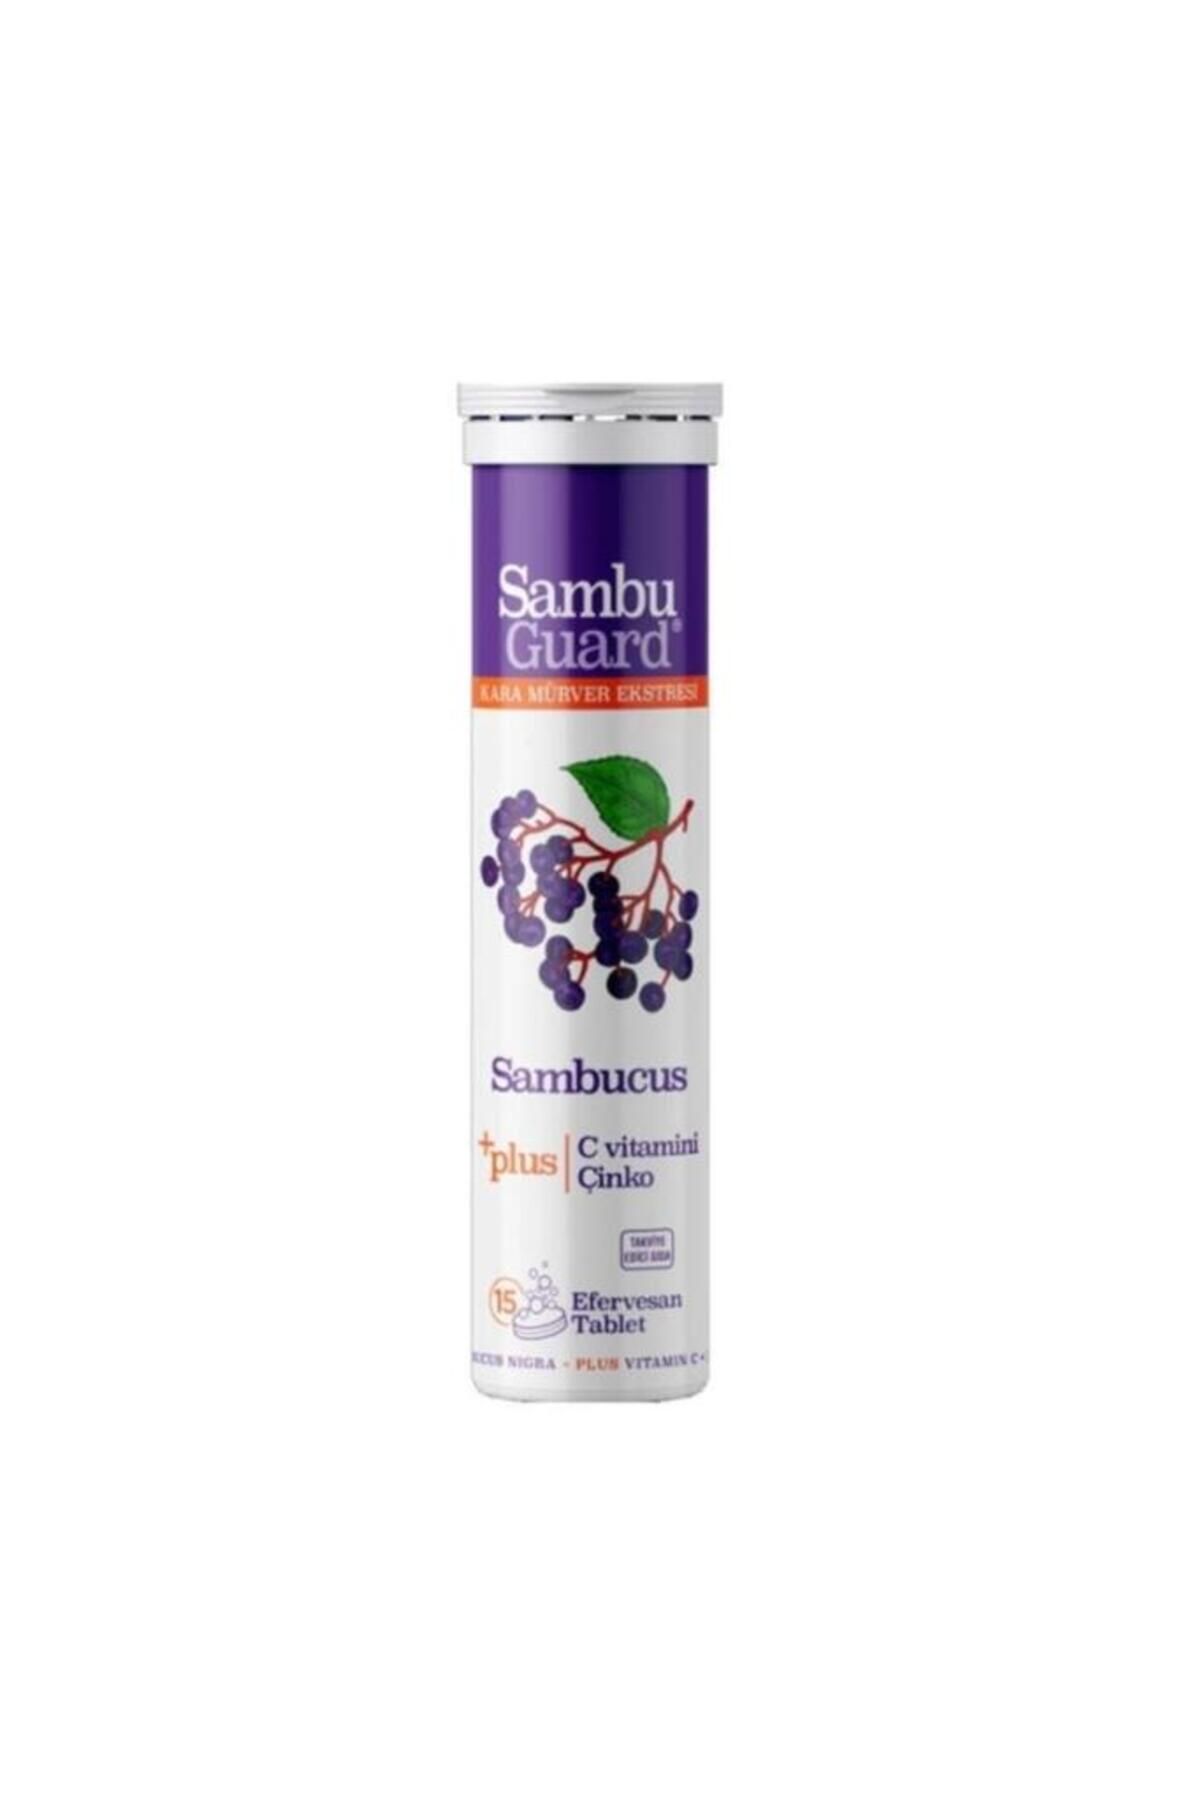 Sambucus Sambuguard Kara Mürver Ekstresi C Vitamin Çinko 15 Efervesan Tablet